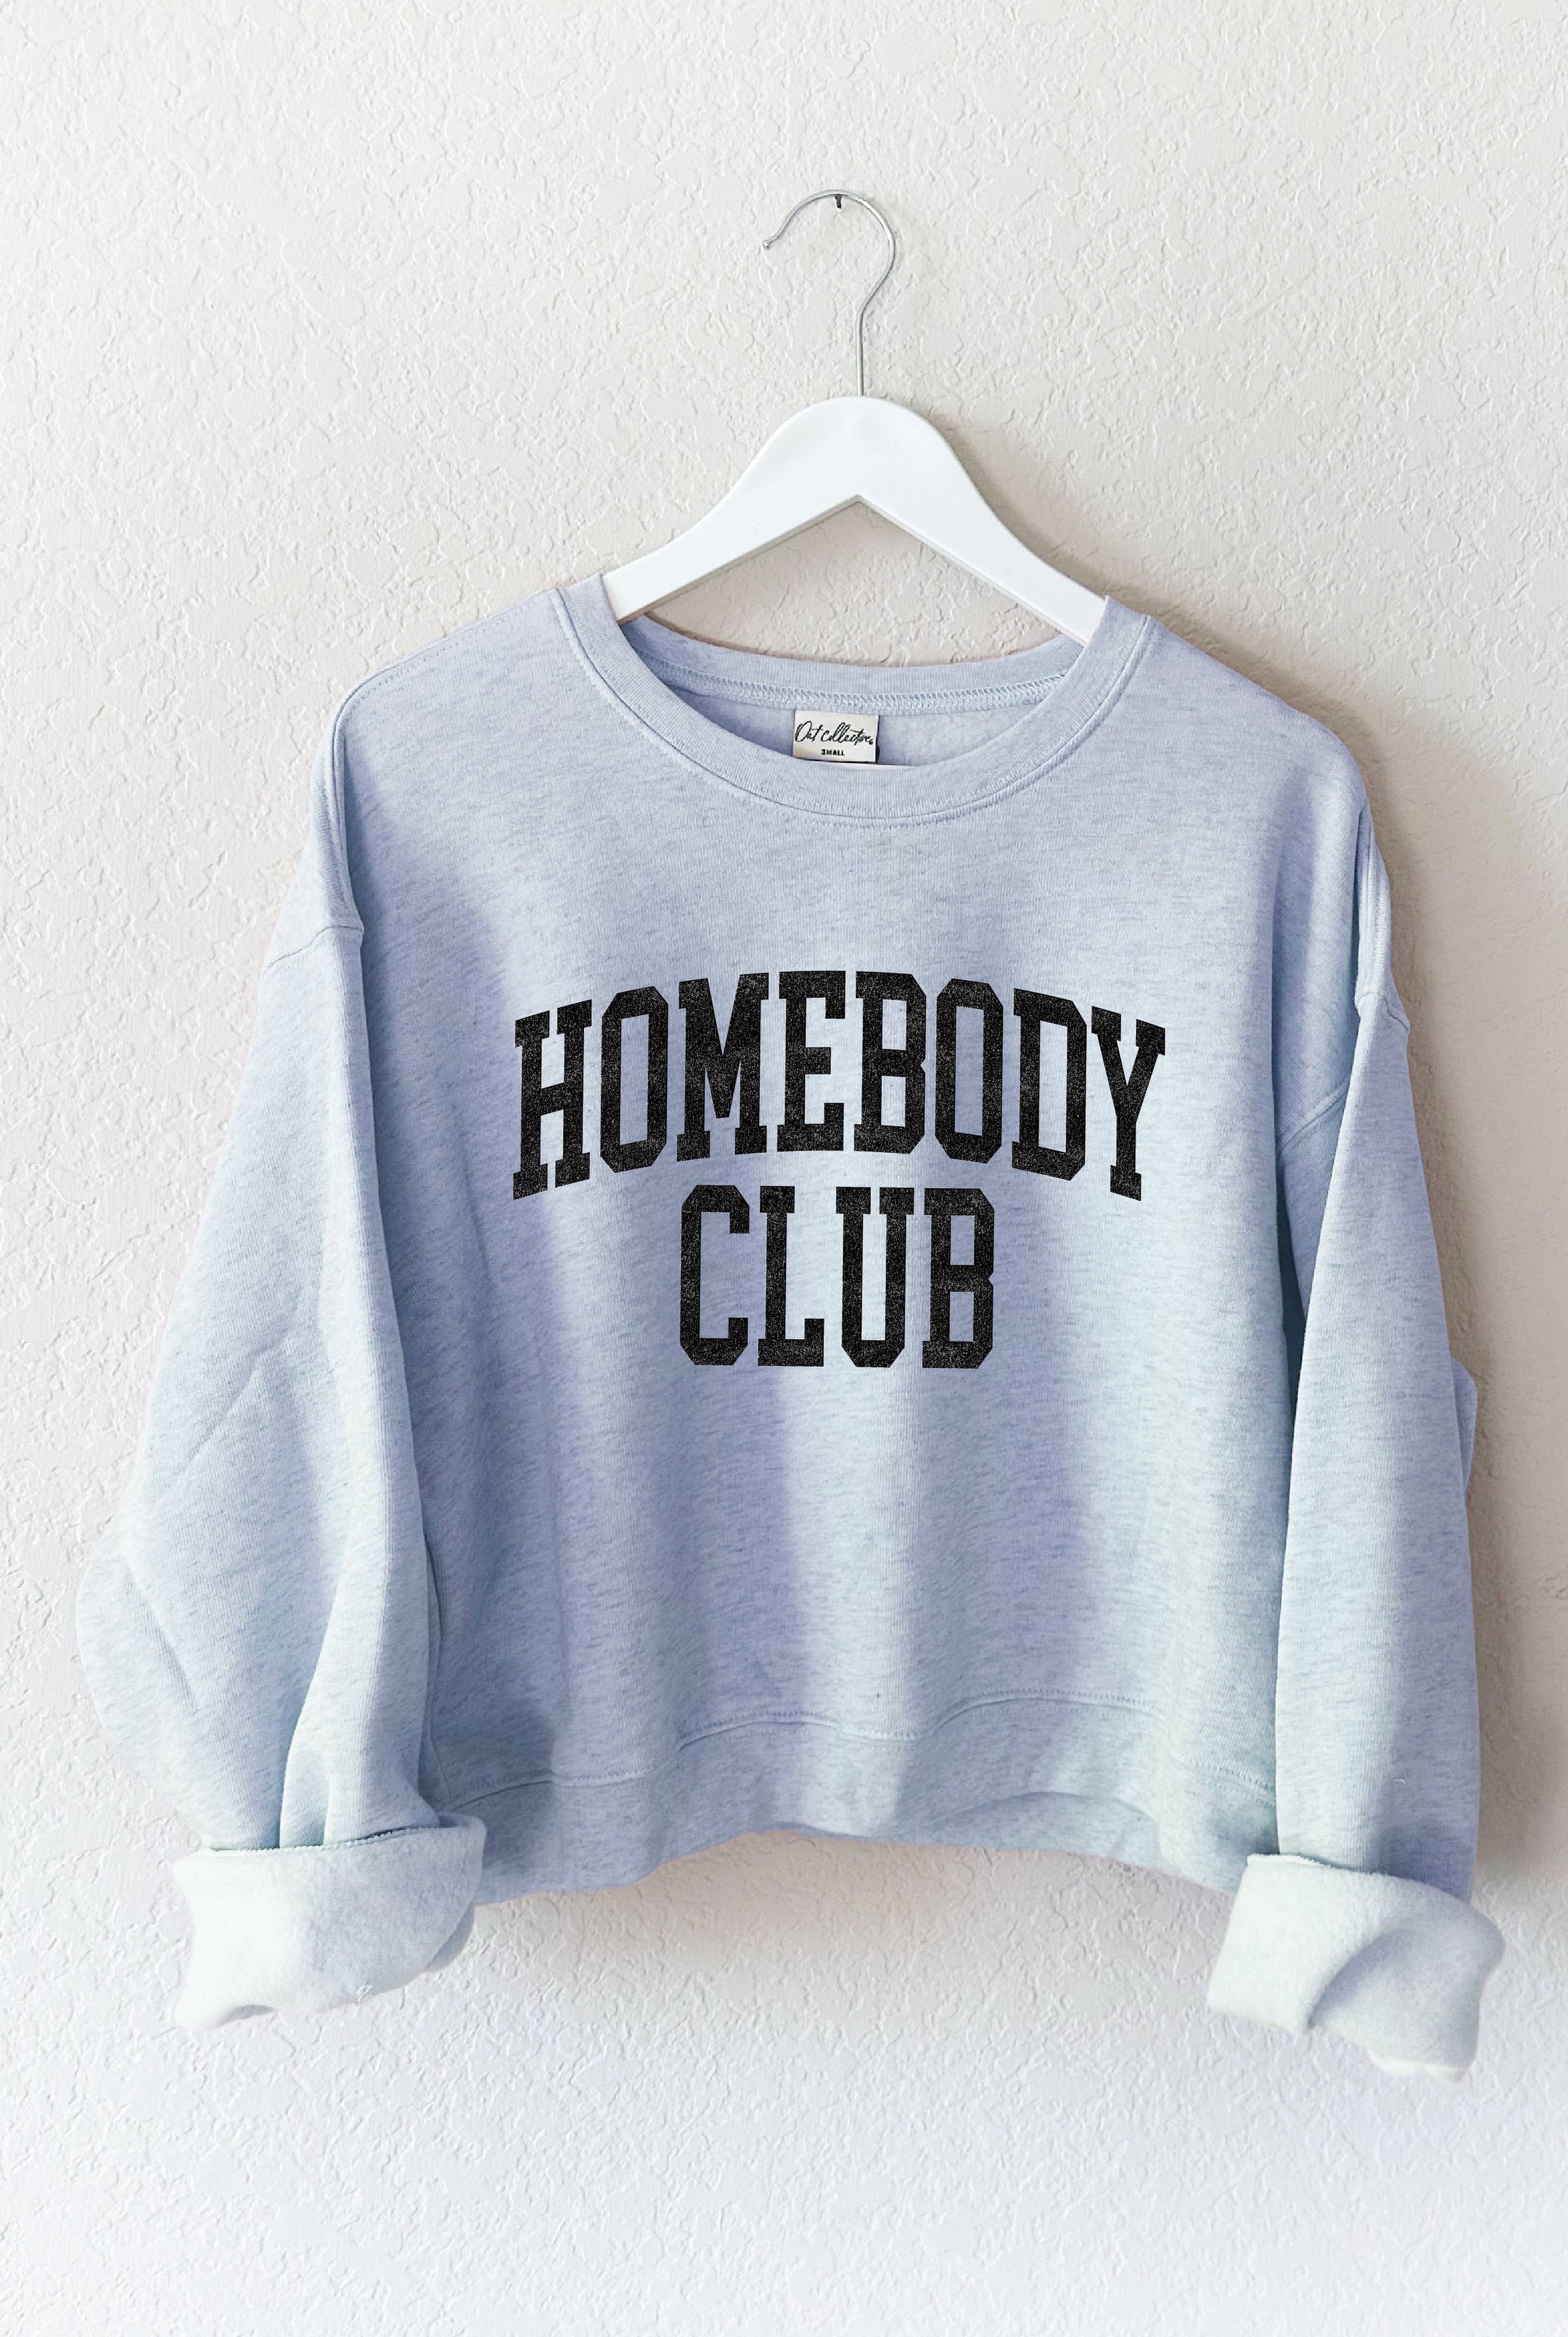 Homebody Club Cropped Sweatshirt